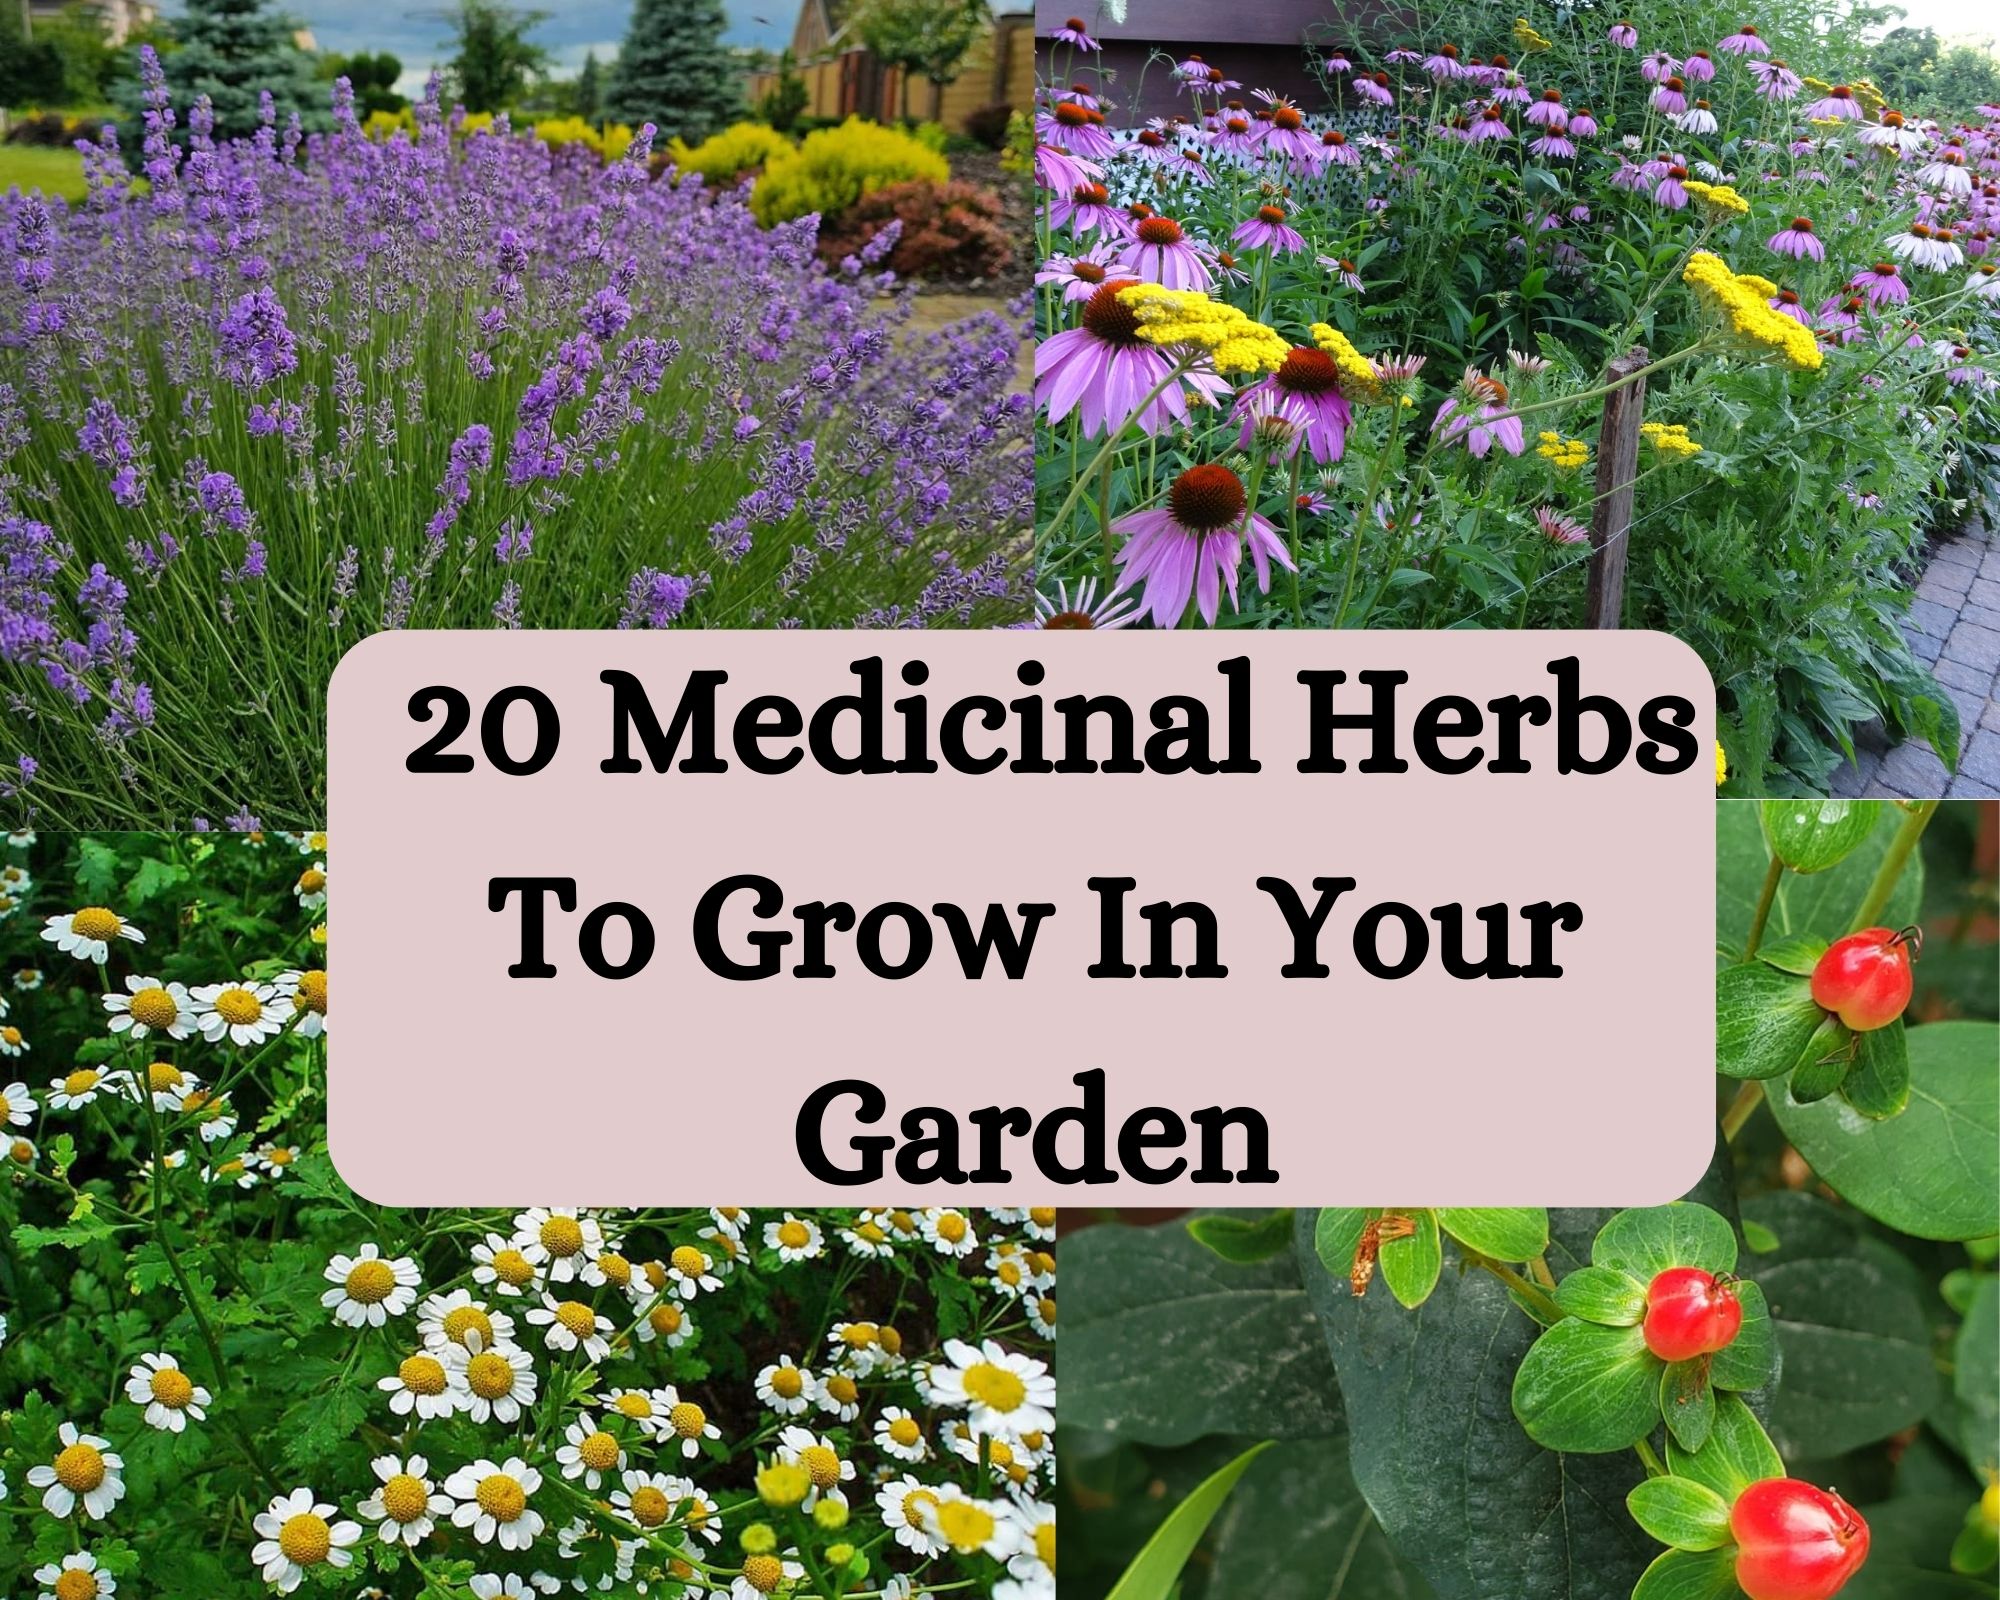 20 Medicinal Herbs To Grow In Your Garden